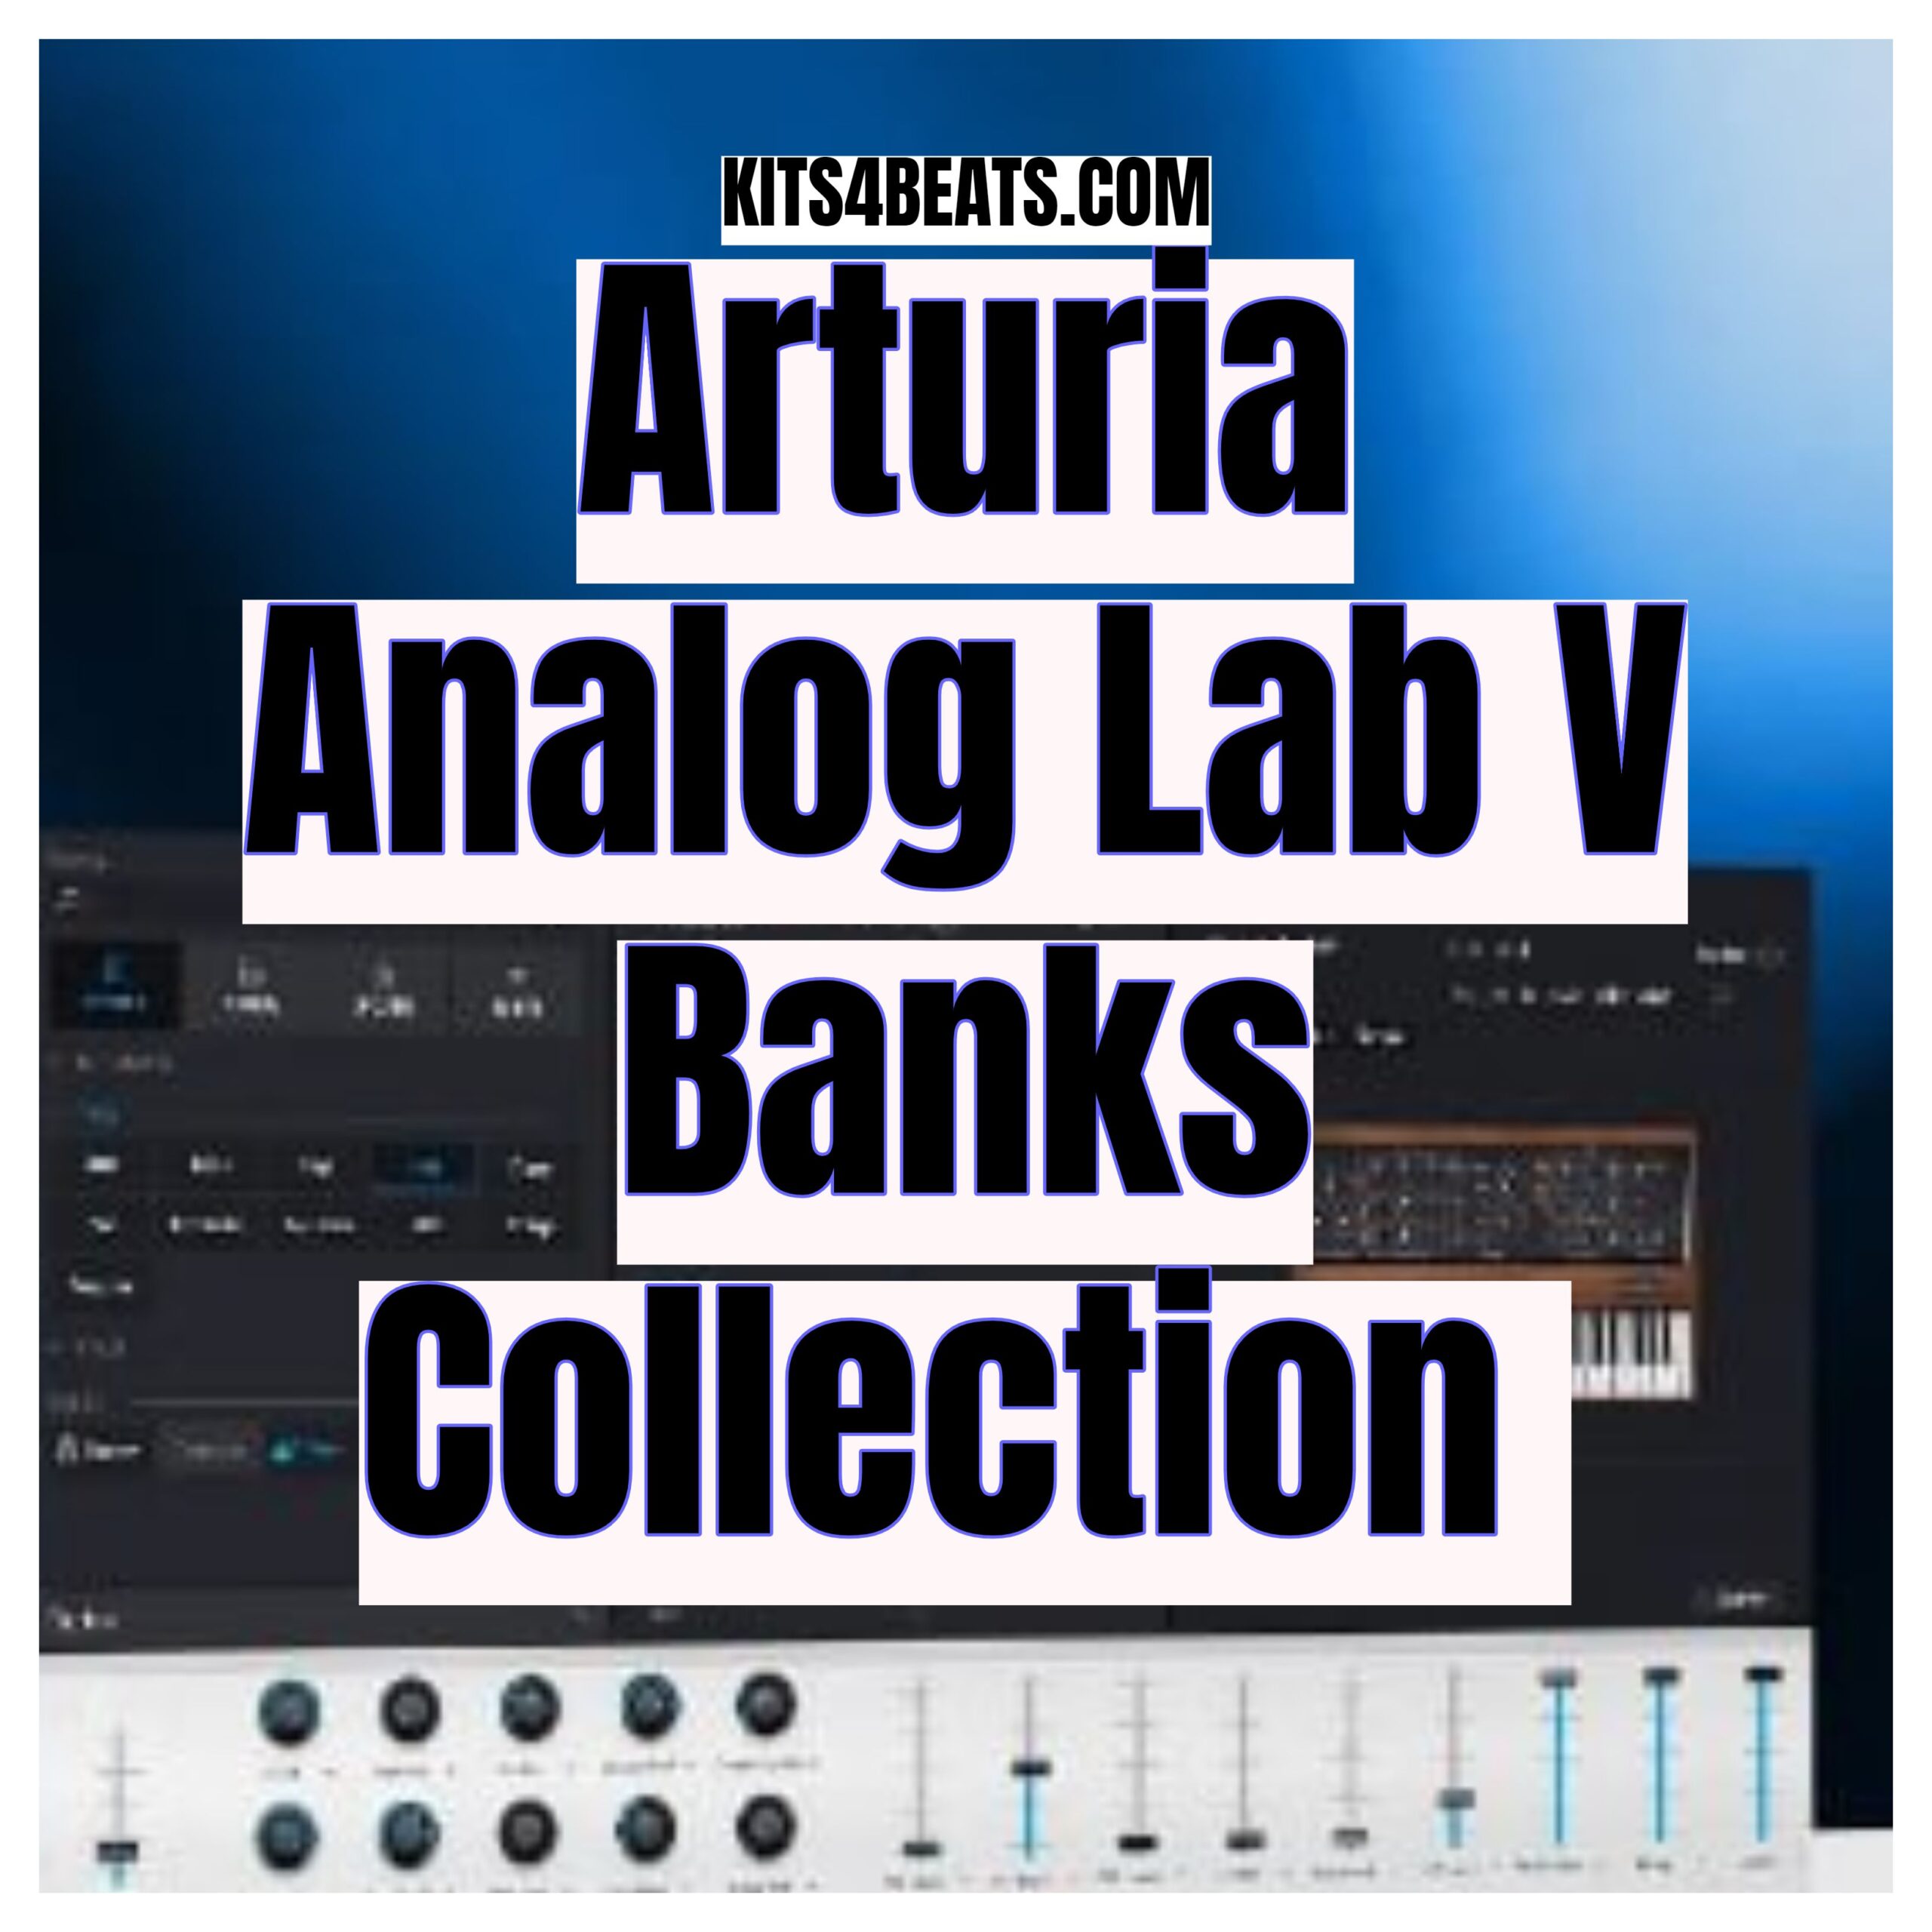 Arturia Analog Lab V Banks Collection Free Download